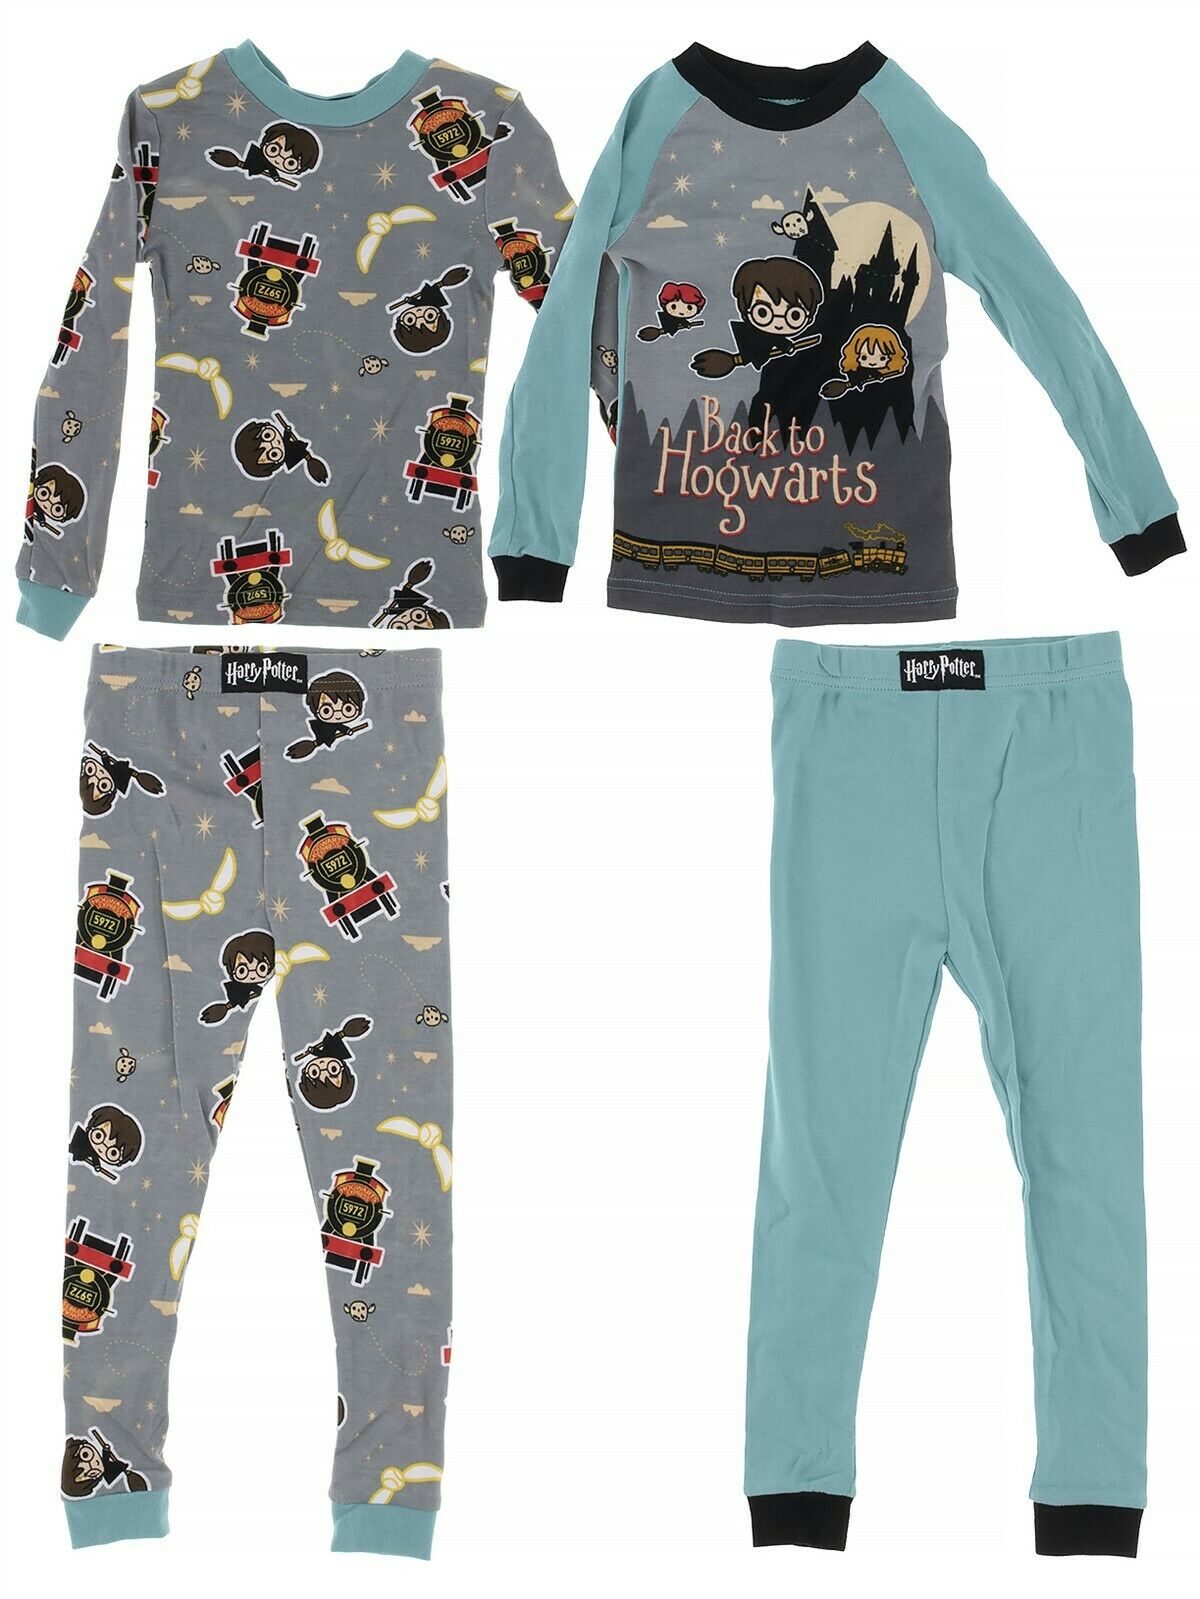 Harry Potter Toddler Boys Teal Gray Hogwarts Cotton 2-Pack Pajamas